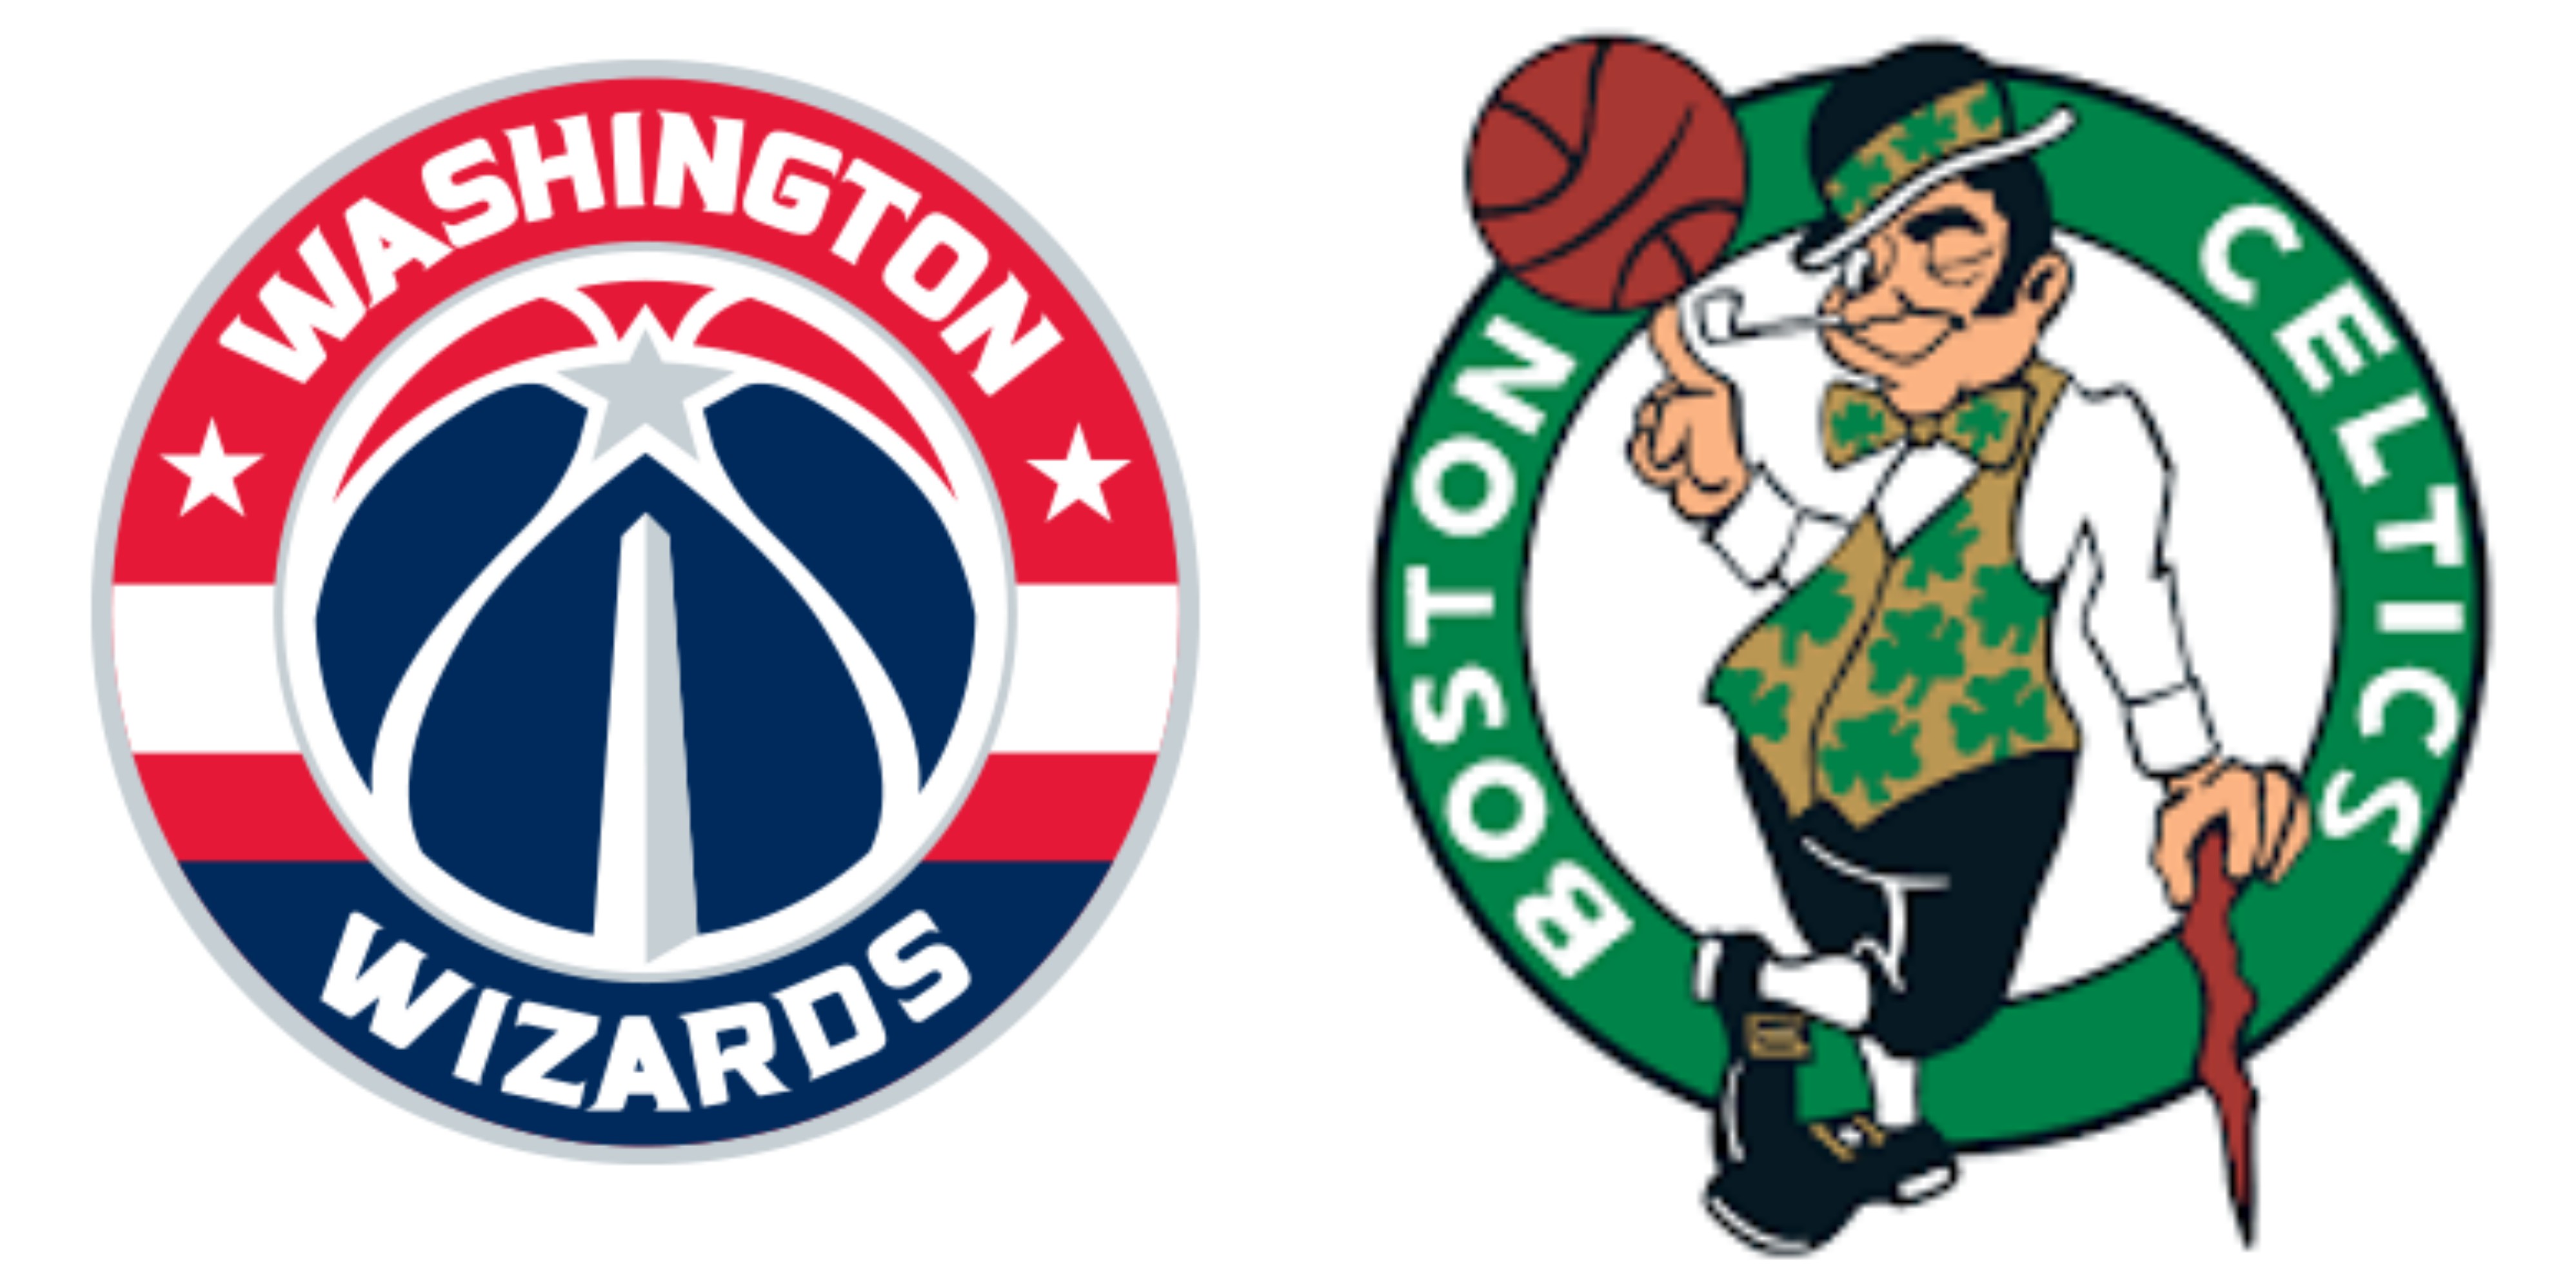 Celtics Vs Wizards / Kqhdhs6vlxv2ym / The washington wizards, the c's